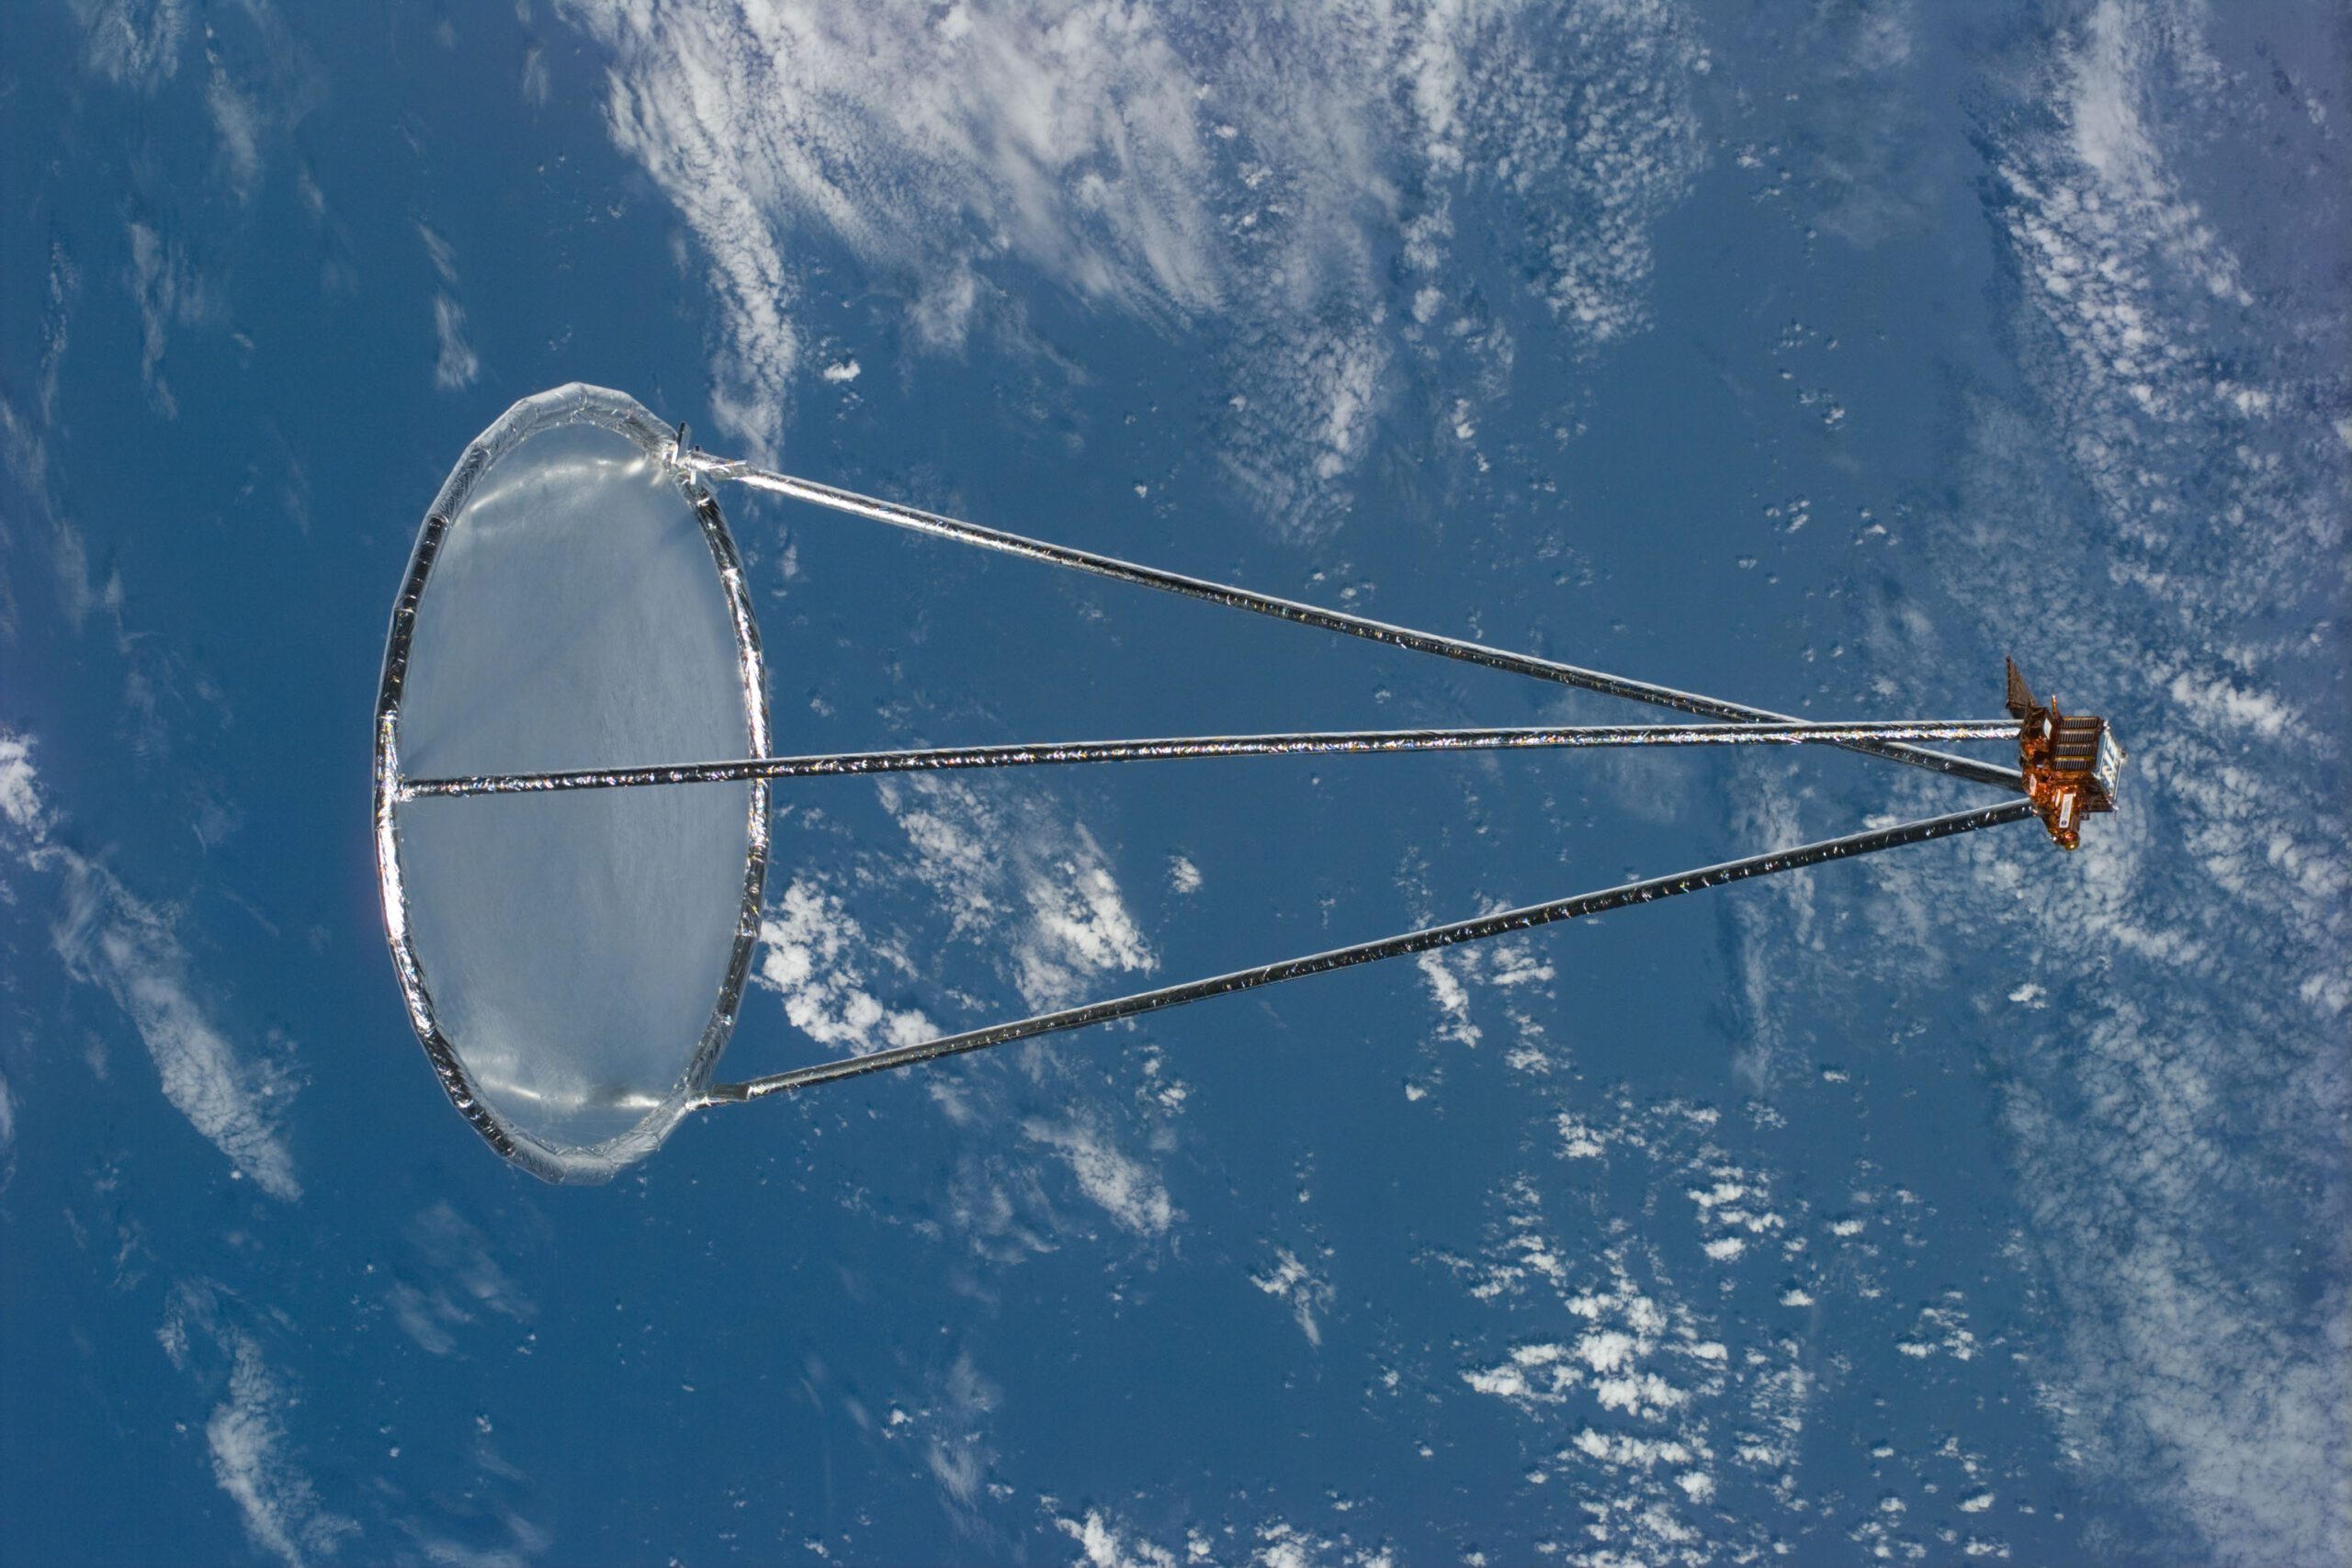 NASA Image of Inflatable Antenna